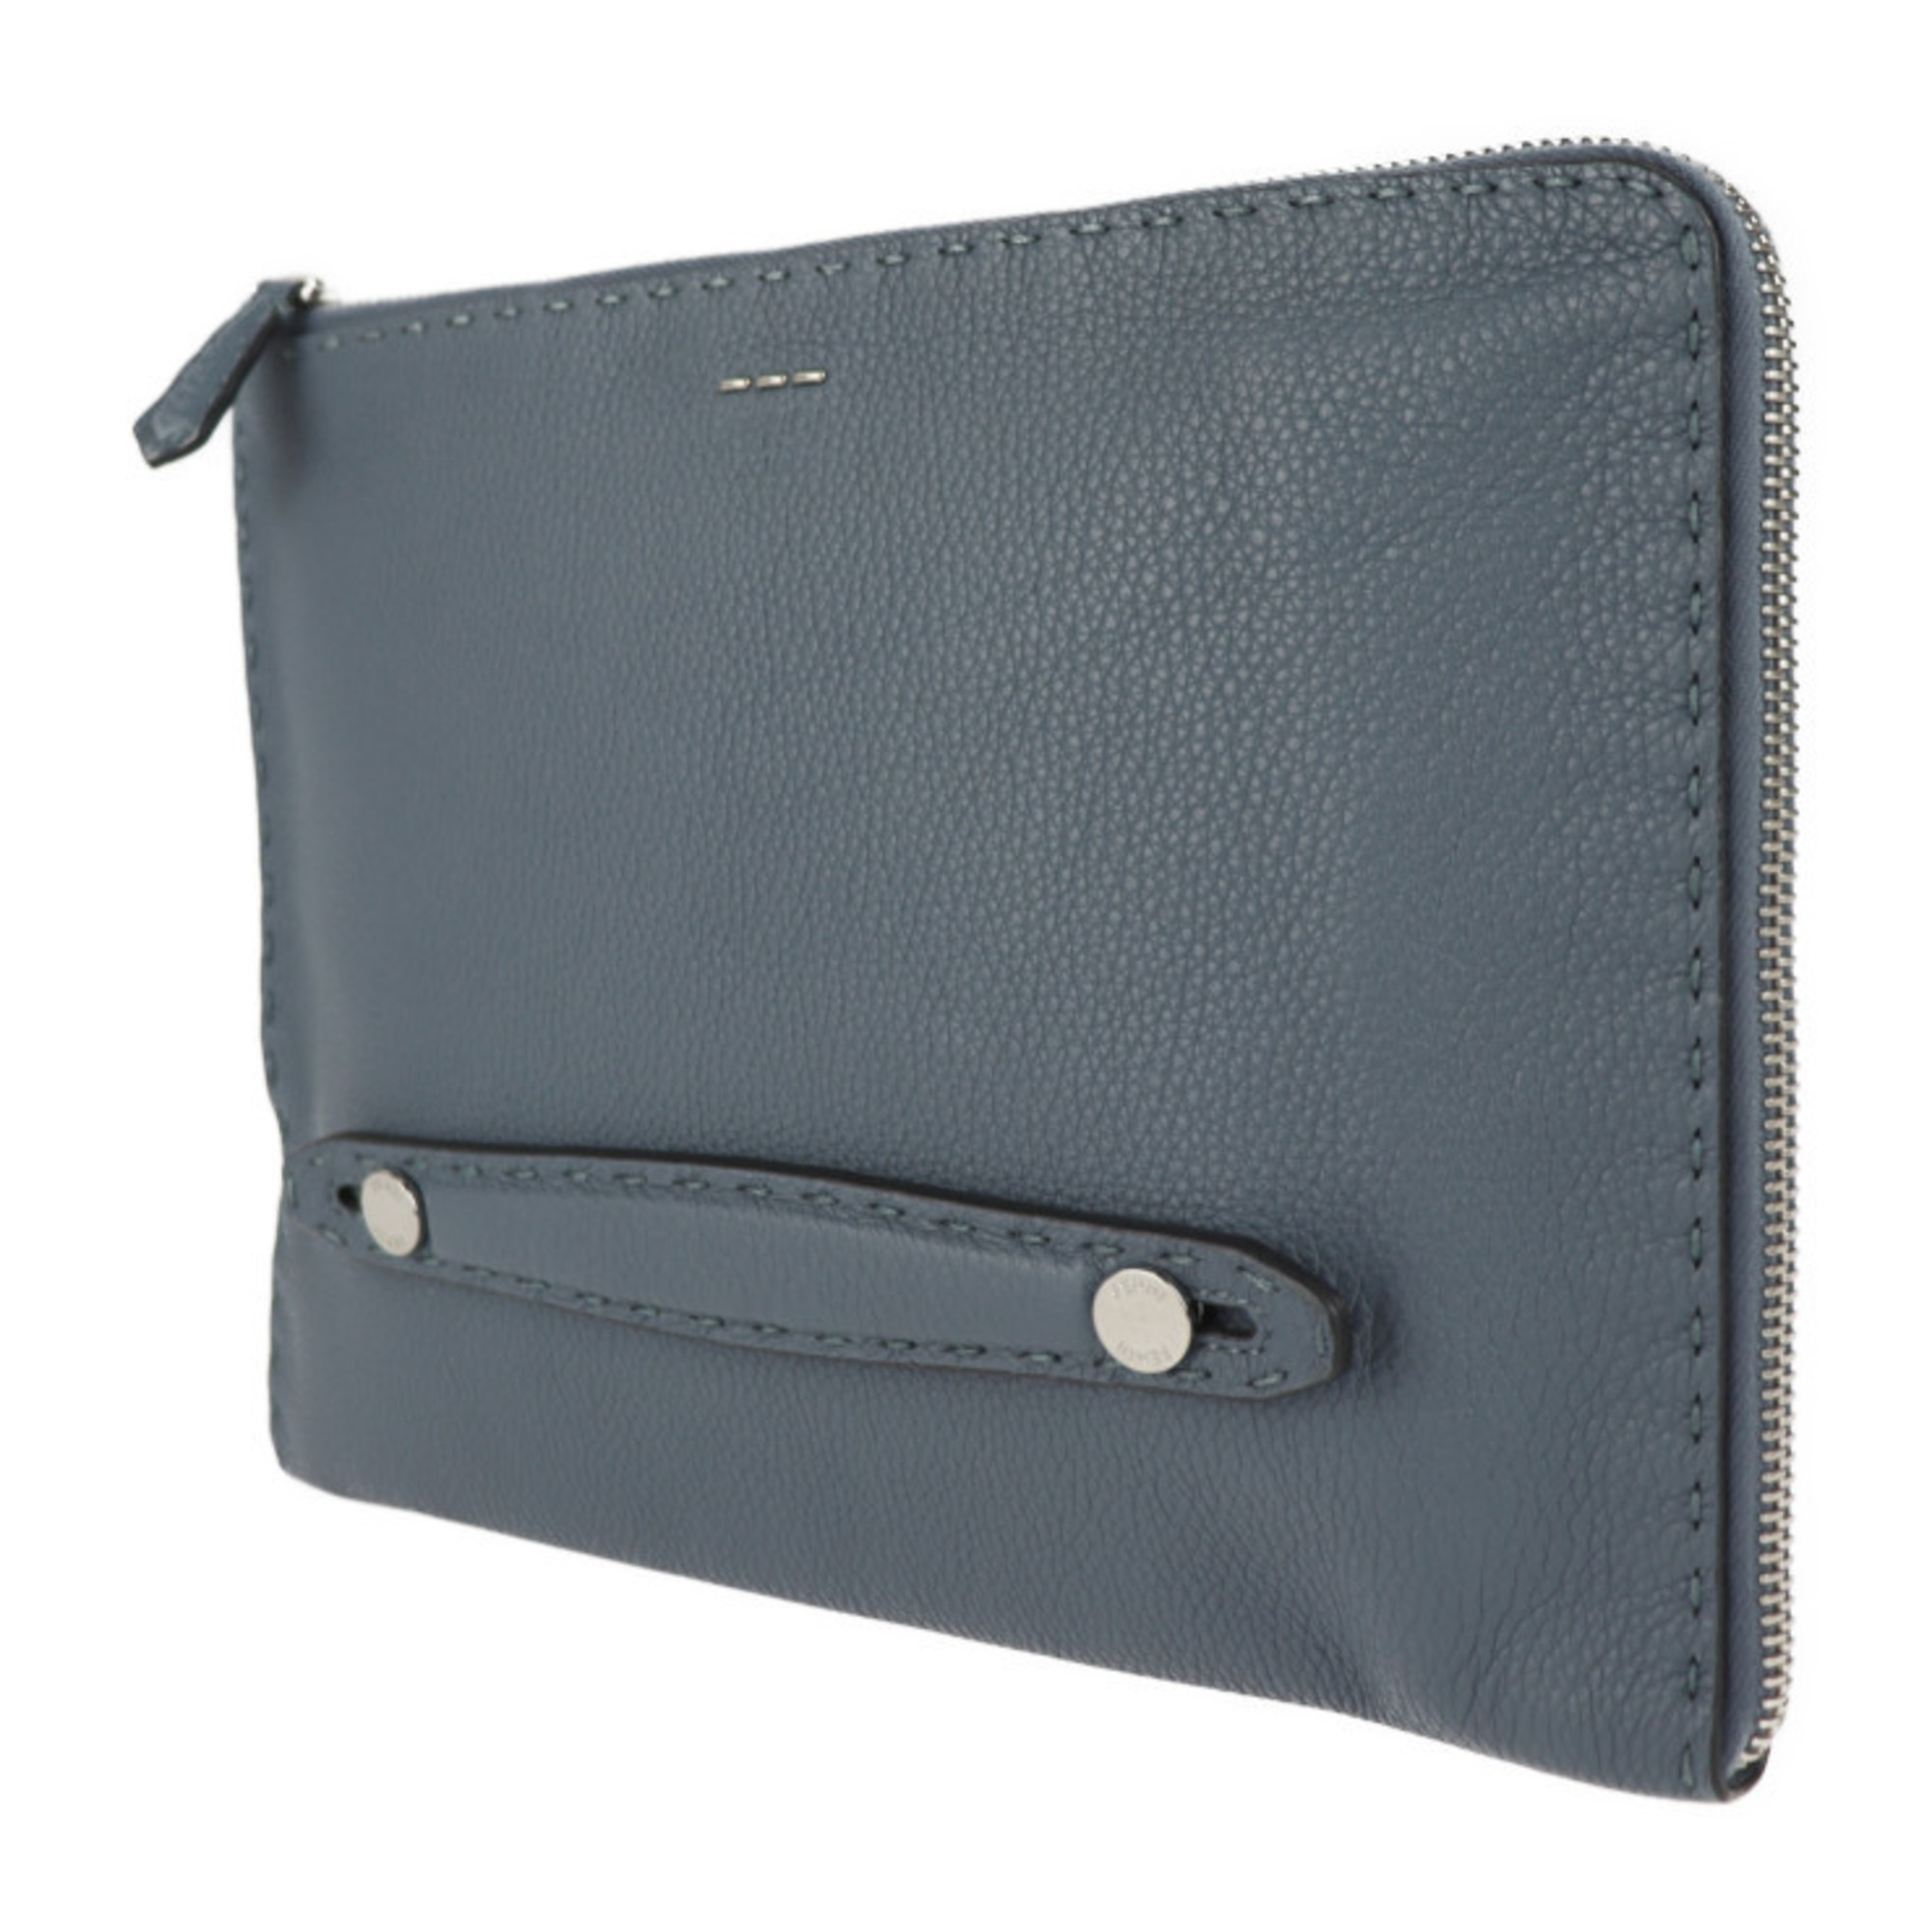 FENDI Fendi Selleria clutch bag 7M0225 leather blue gray second handbag